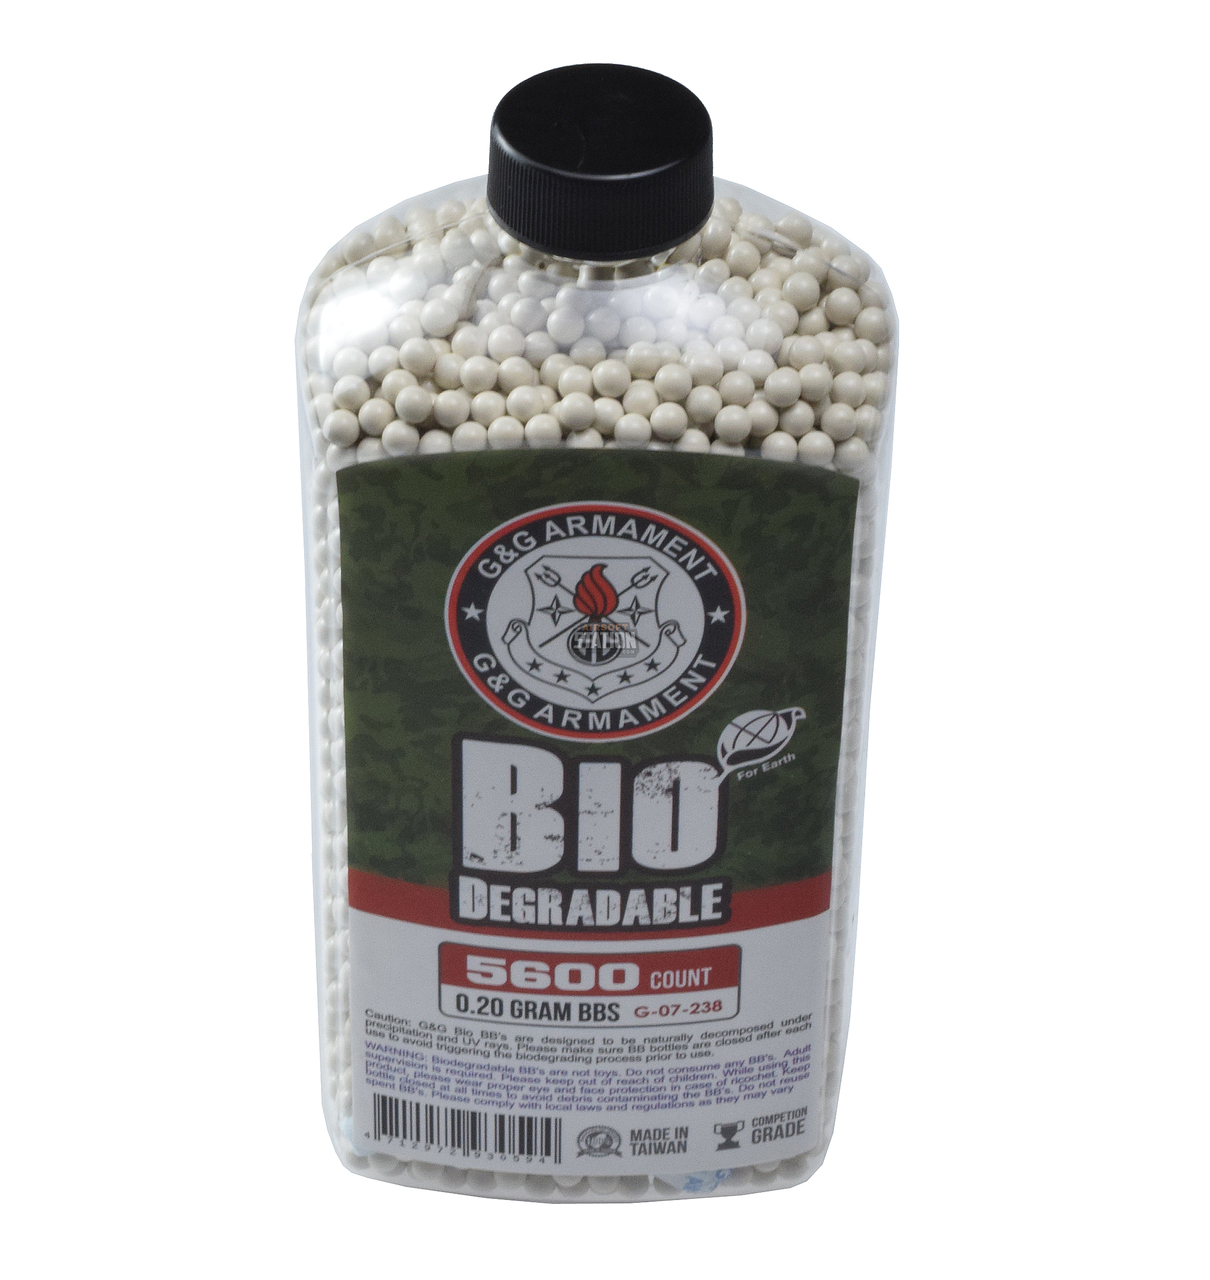 G&G Perfect BBs, 0.20g, 5600 ct. Bottle, White, Biodegradable